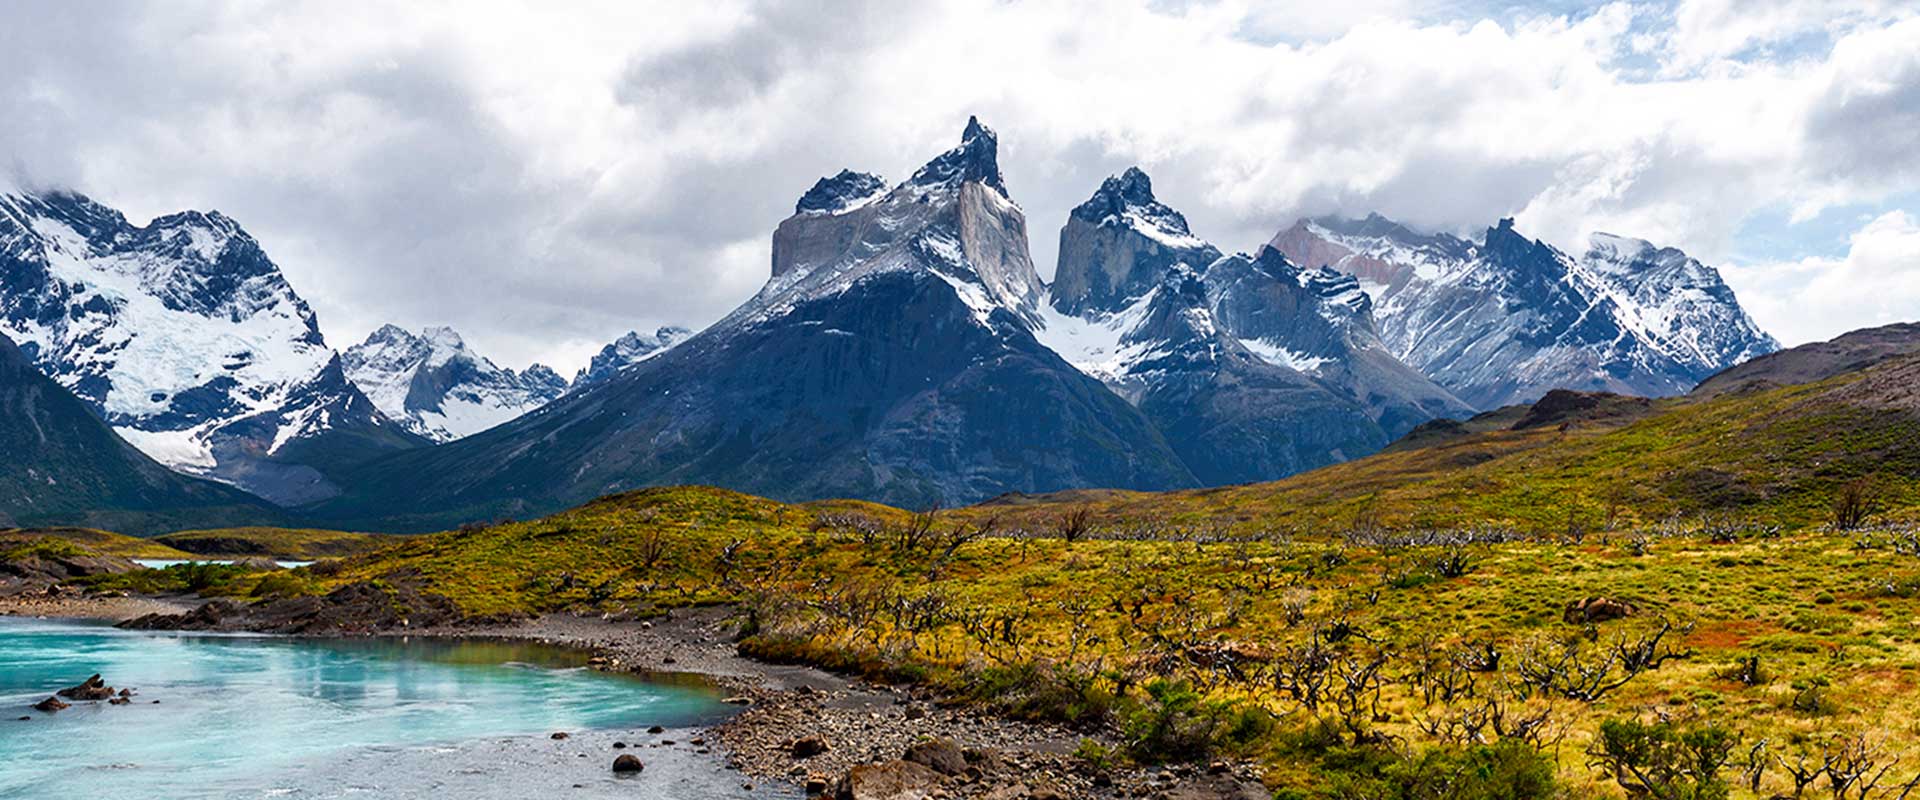 Patagonia como nunca antes